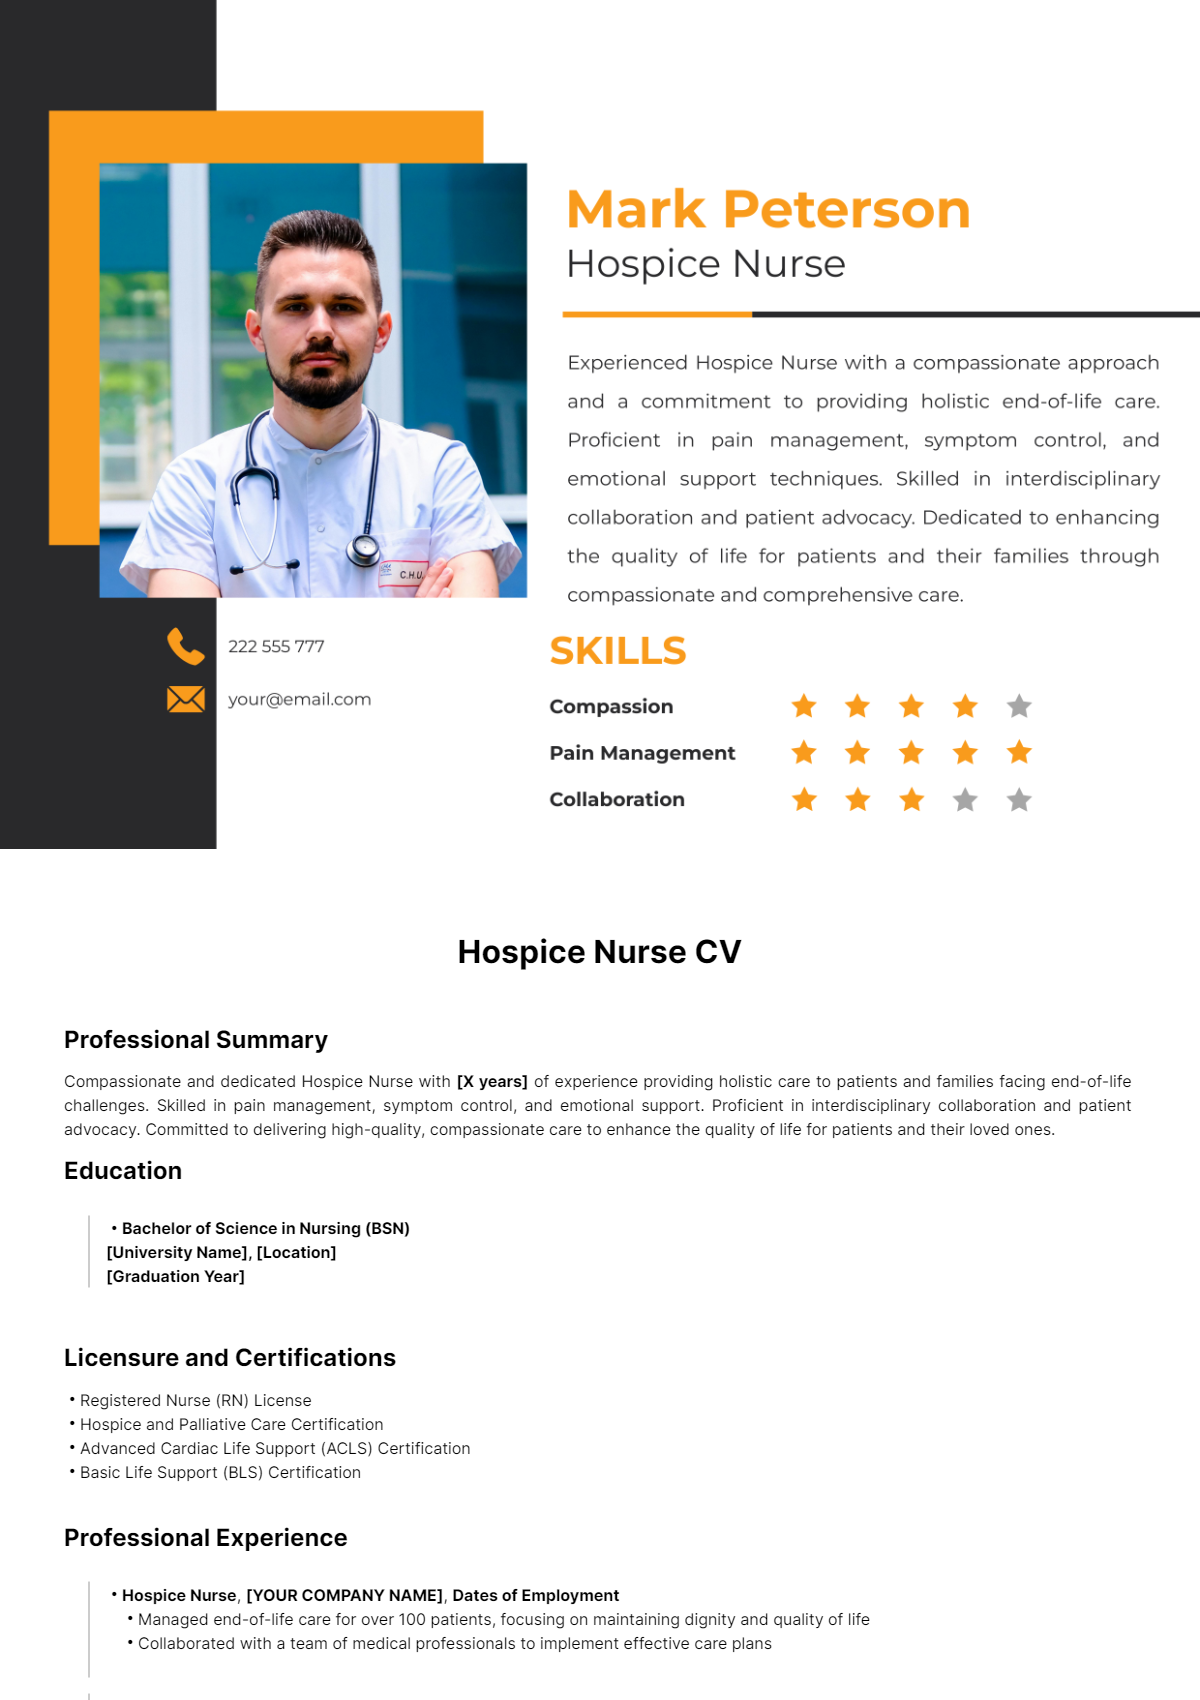 Free Hospice Nurse CV Template